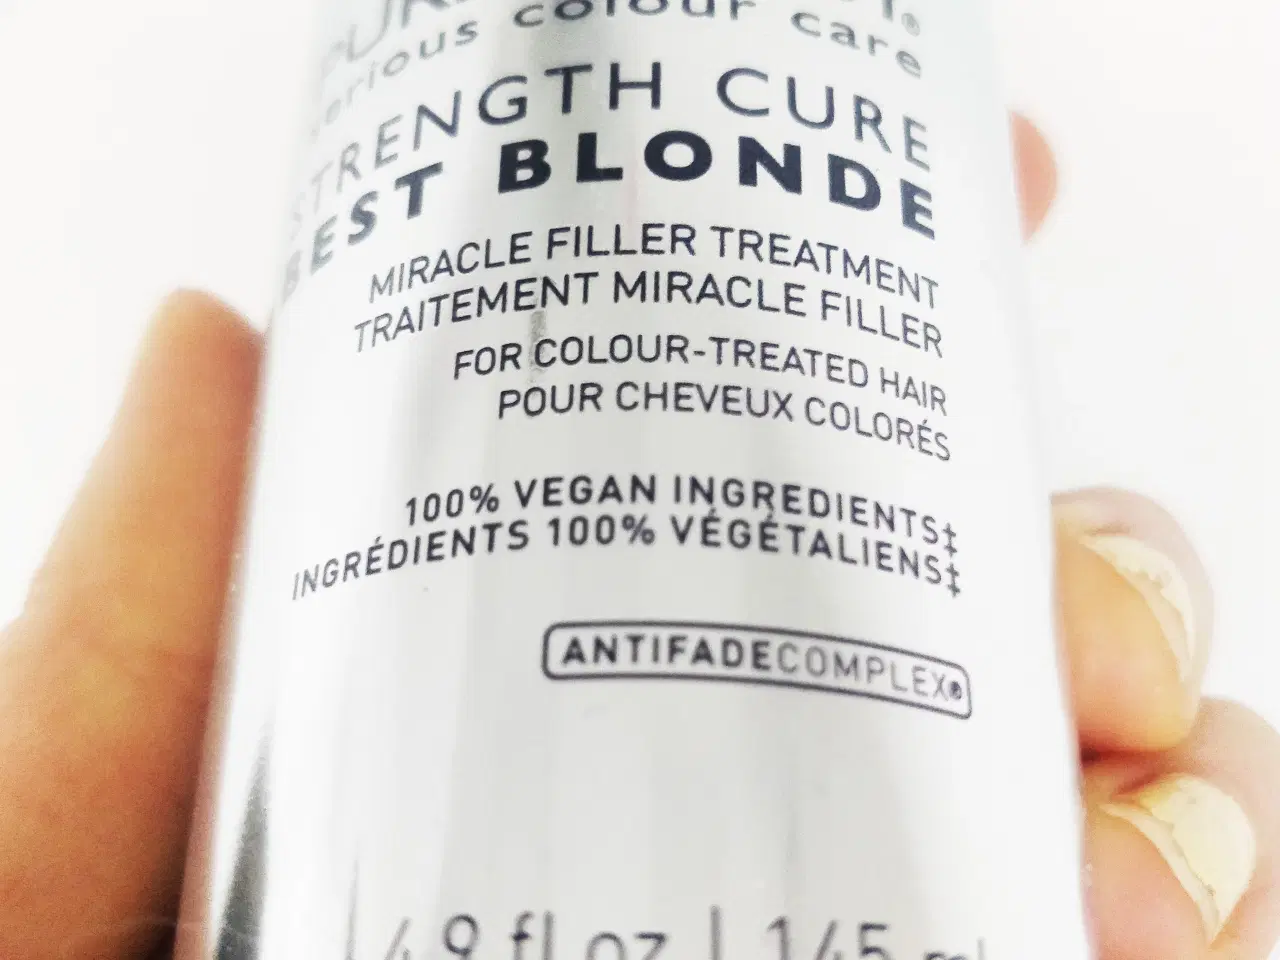 Billede 2 - Pureology Strength Cure Best Blonde Miracle Filler